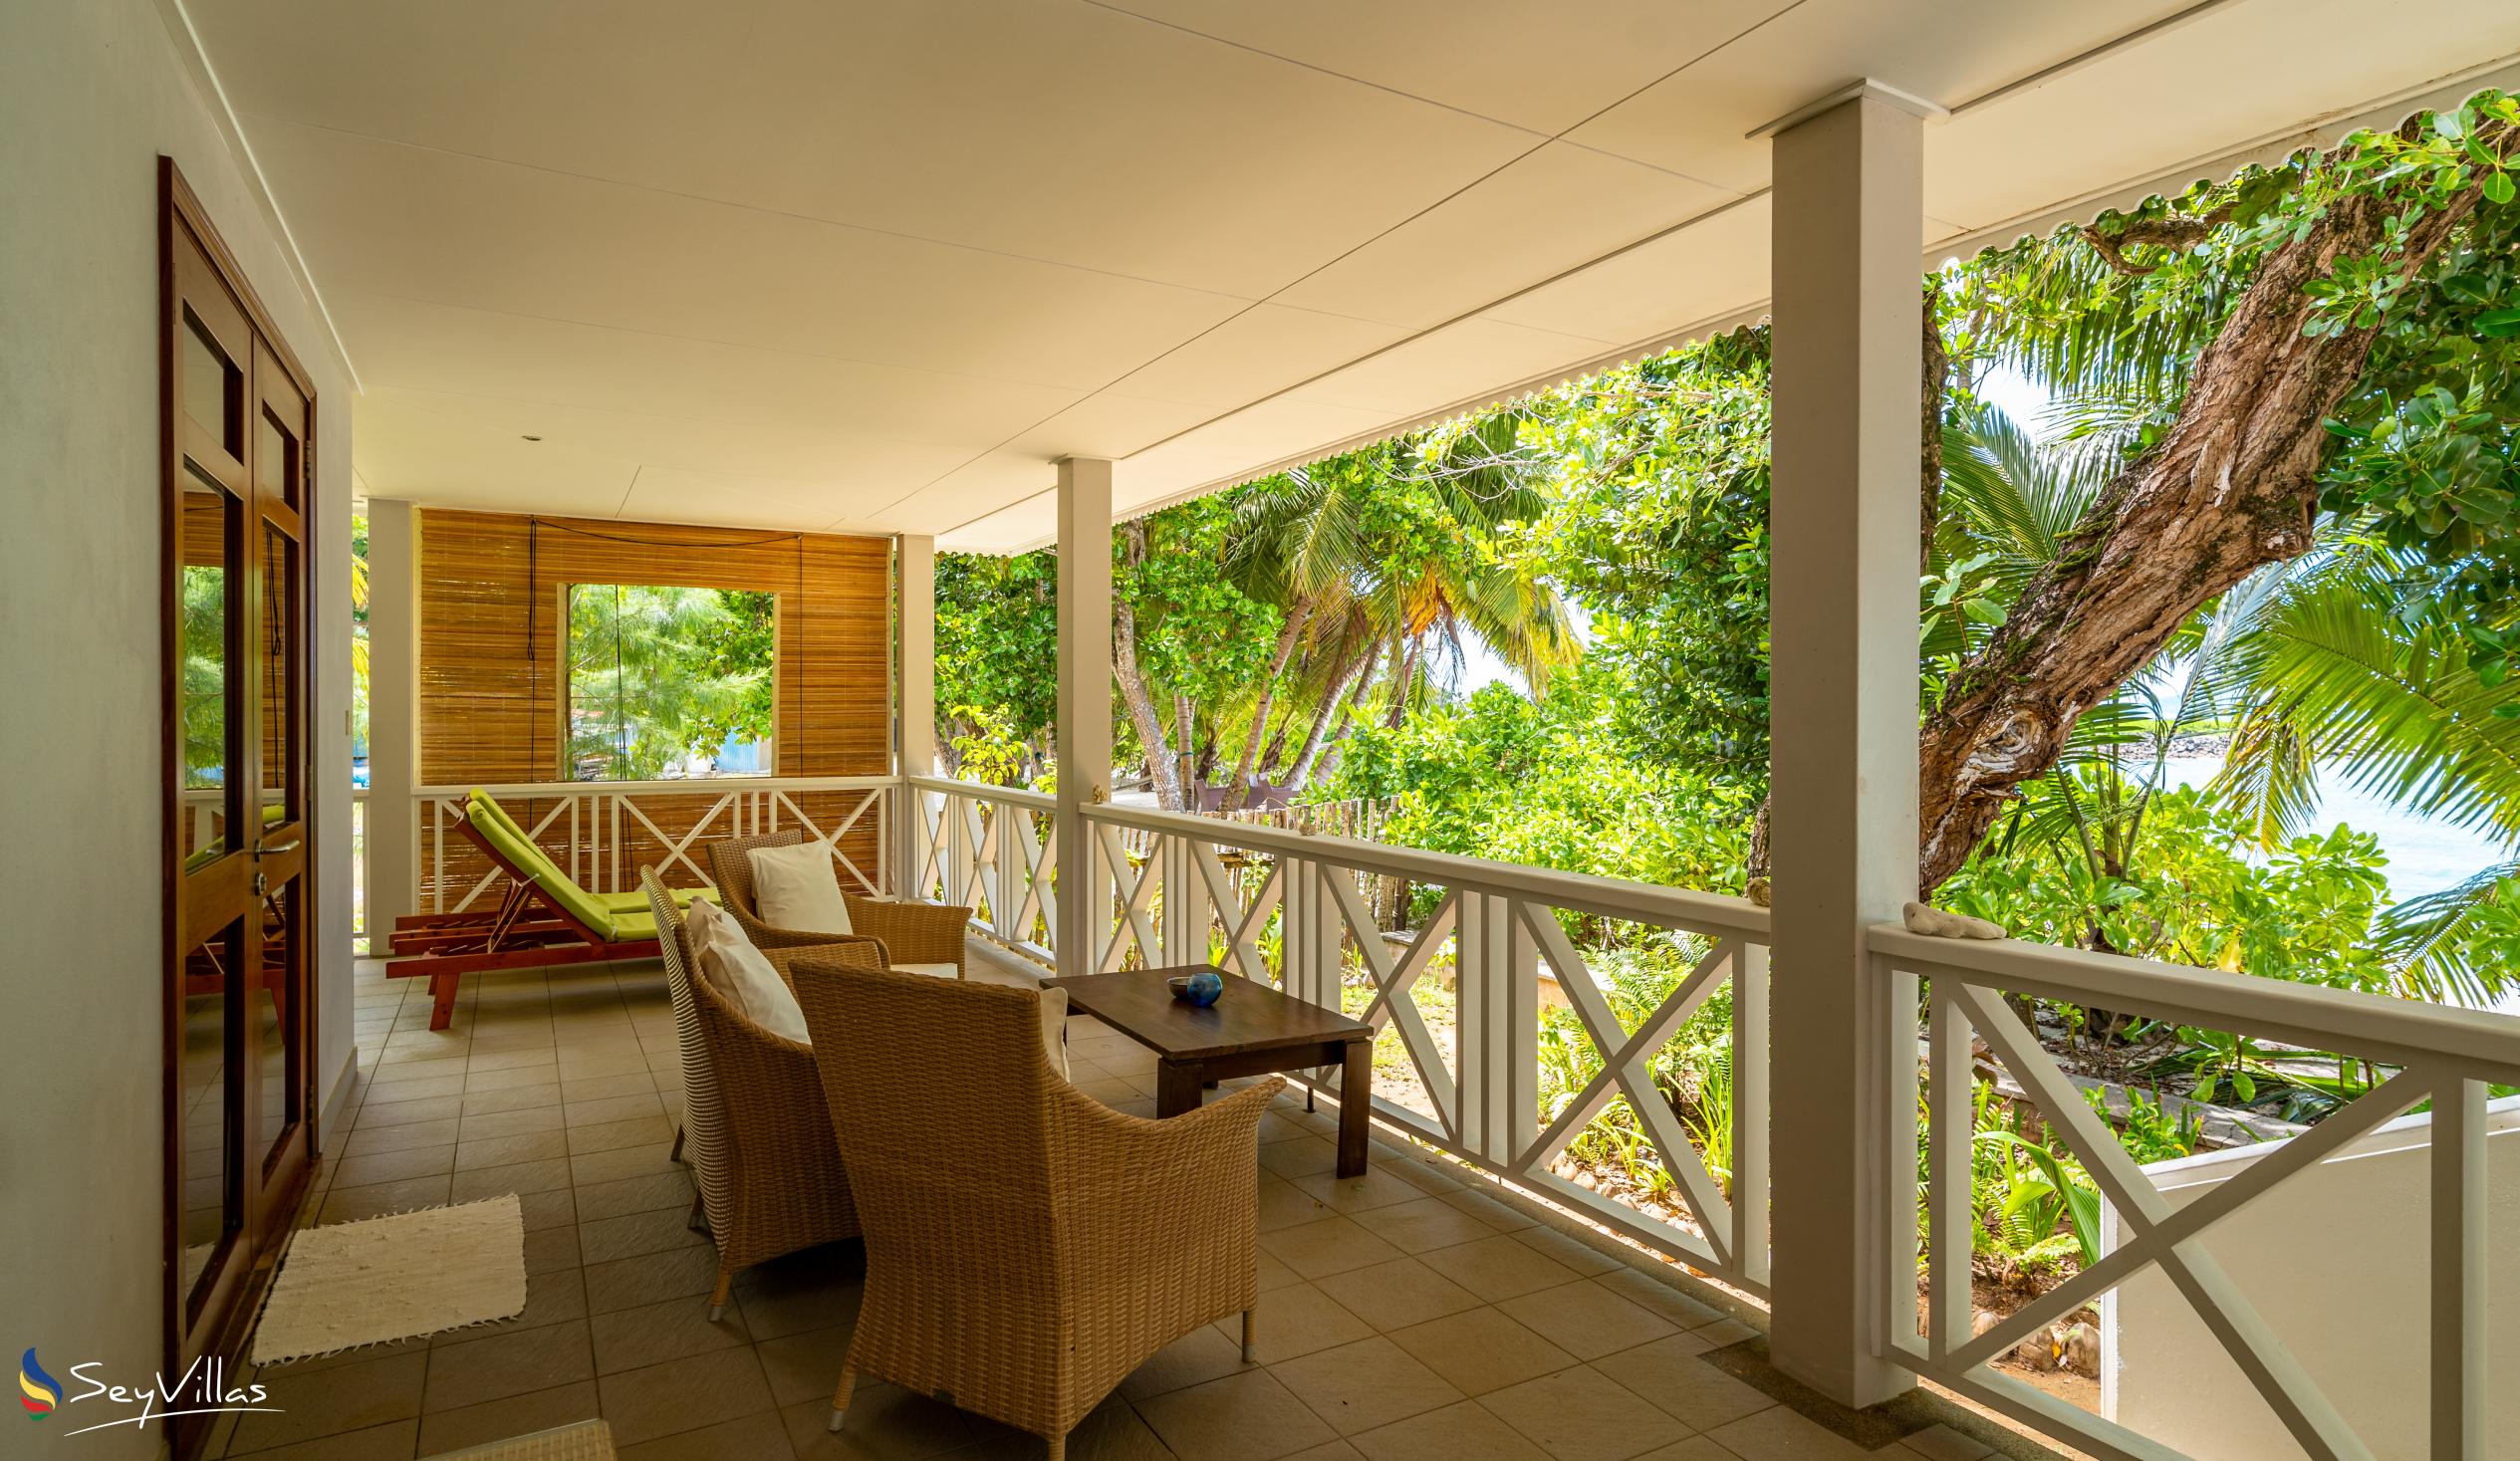 Photo 50: La Belle Tortue - Varangue Room with Veranda - Silhouette Island (Seychelles)